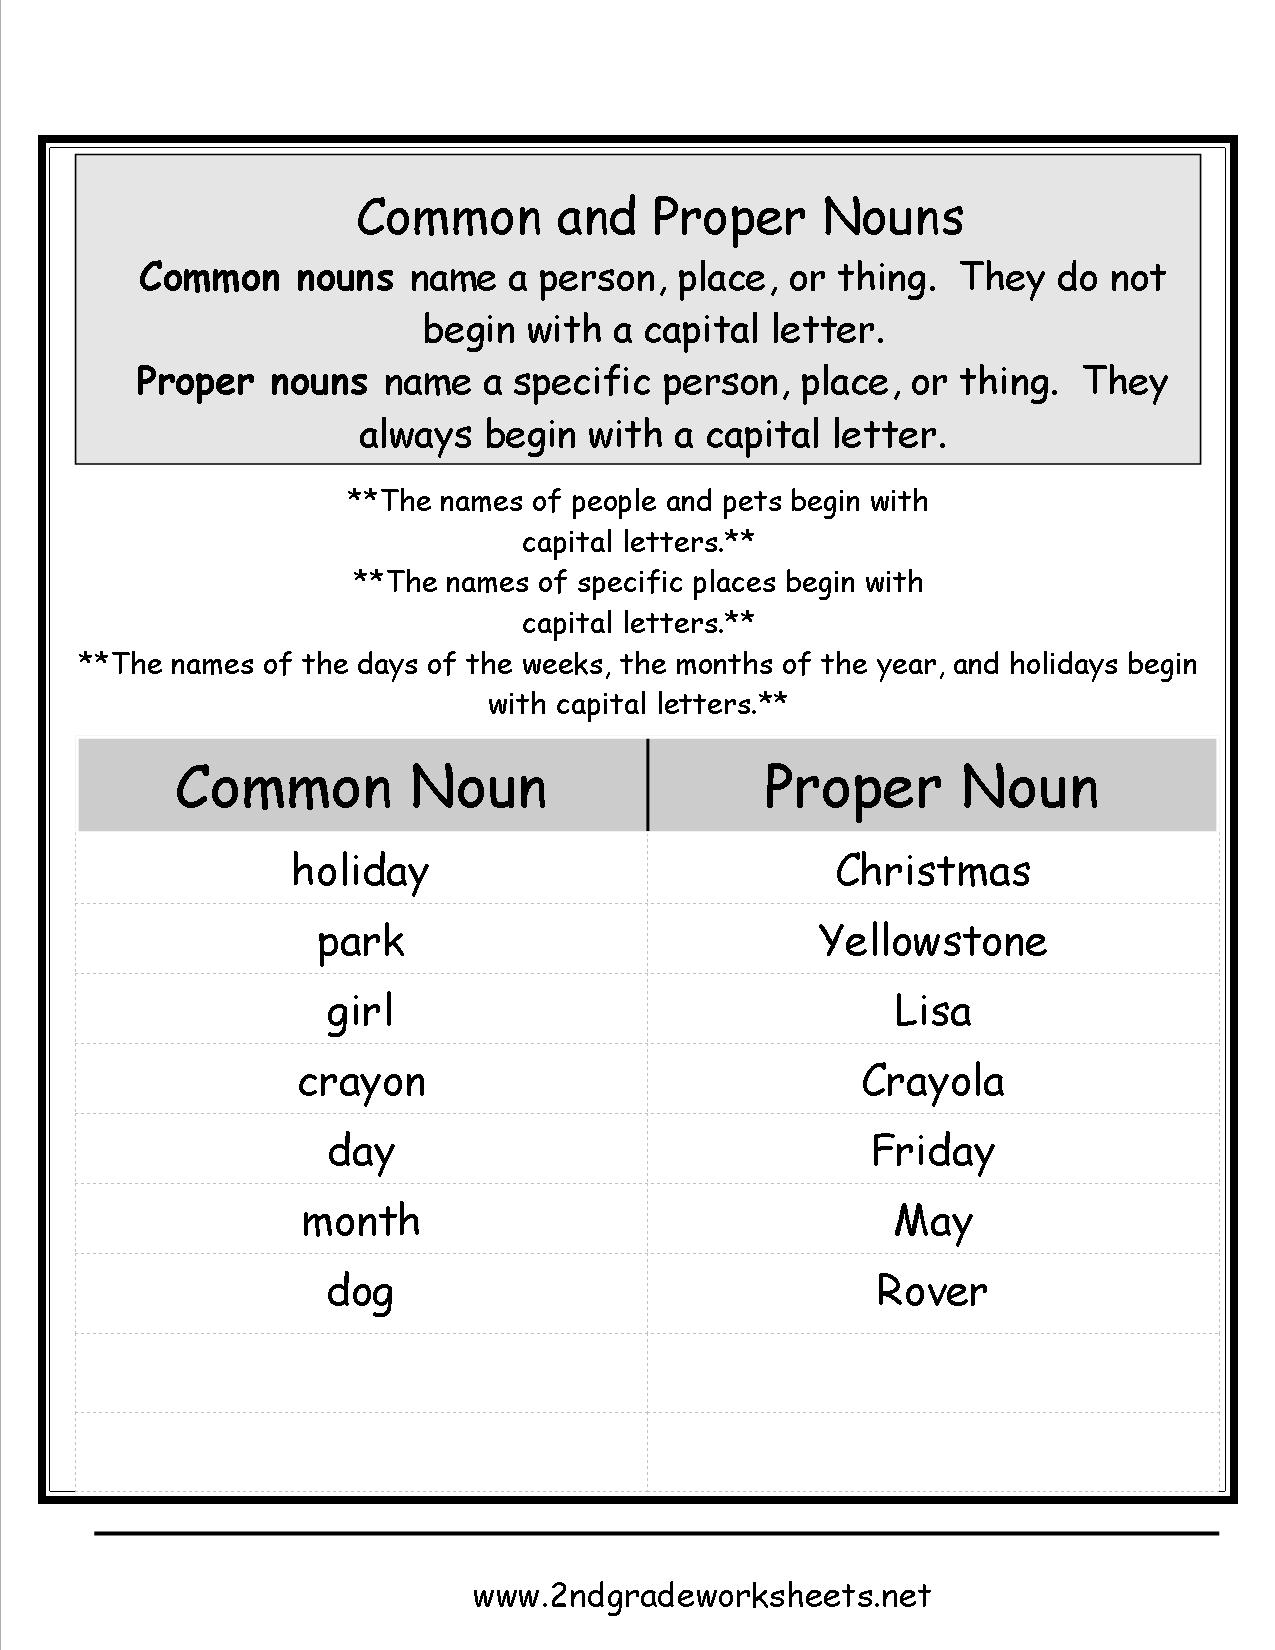 Proper Noun Examples Worksheet